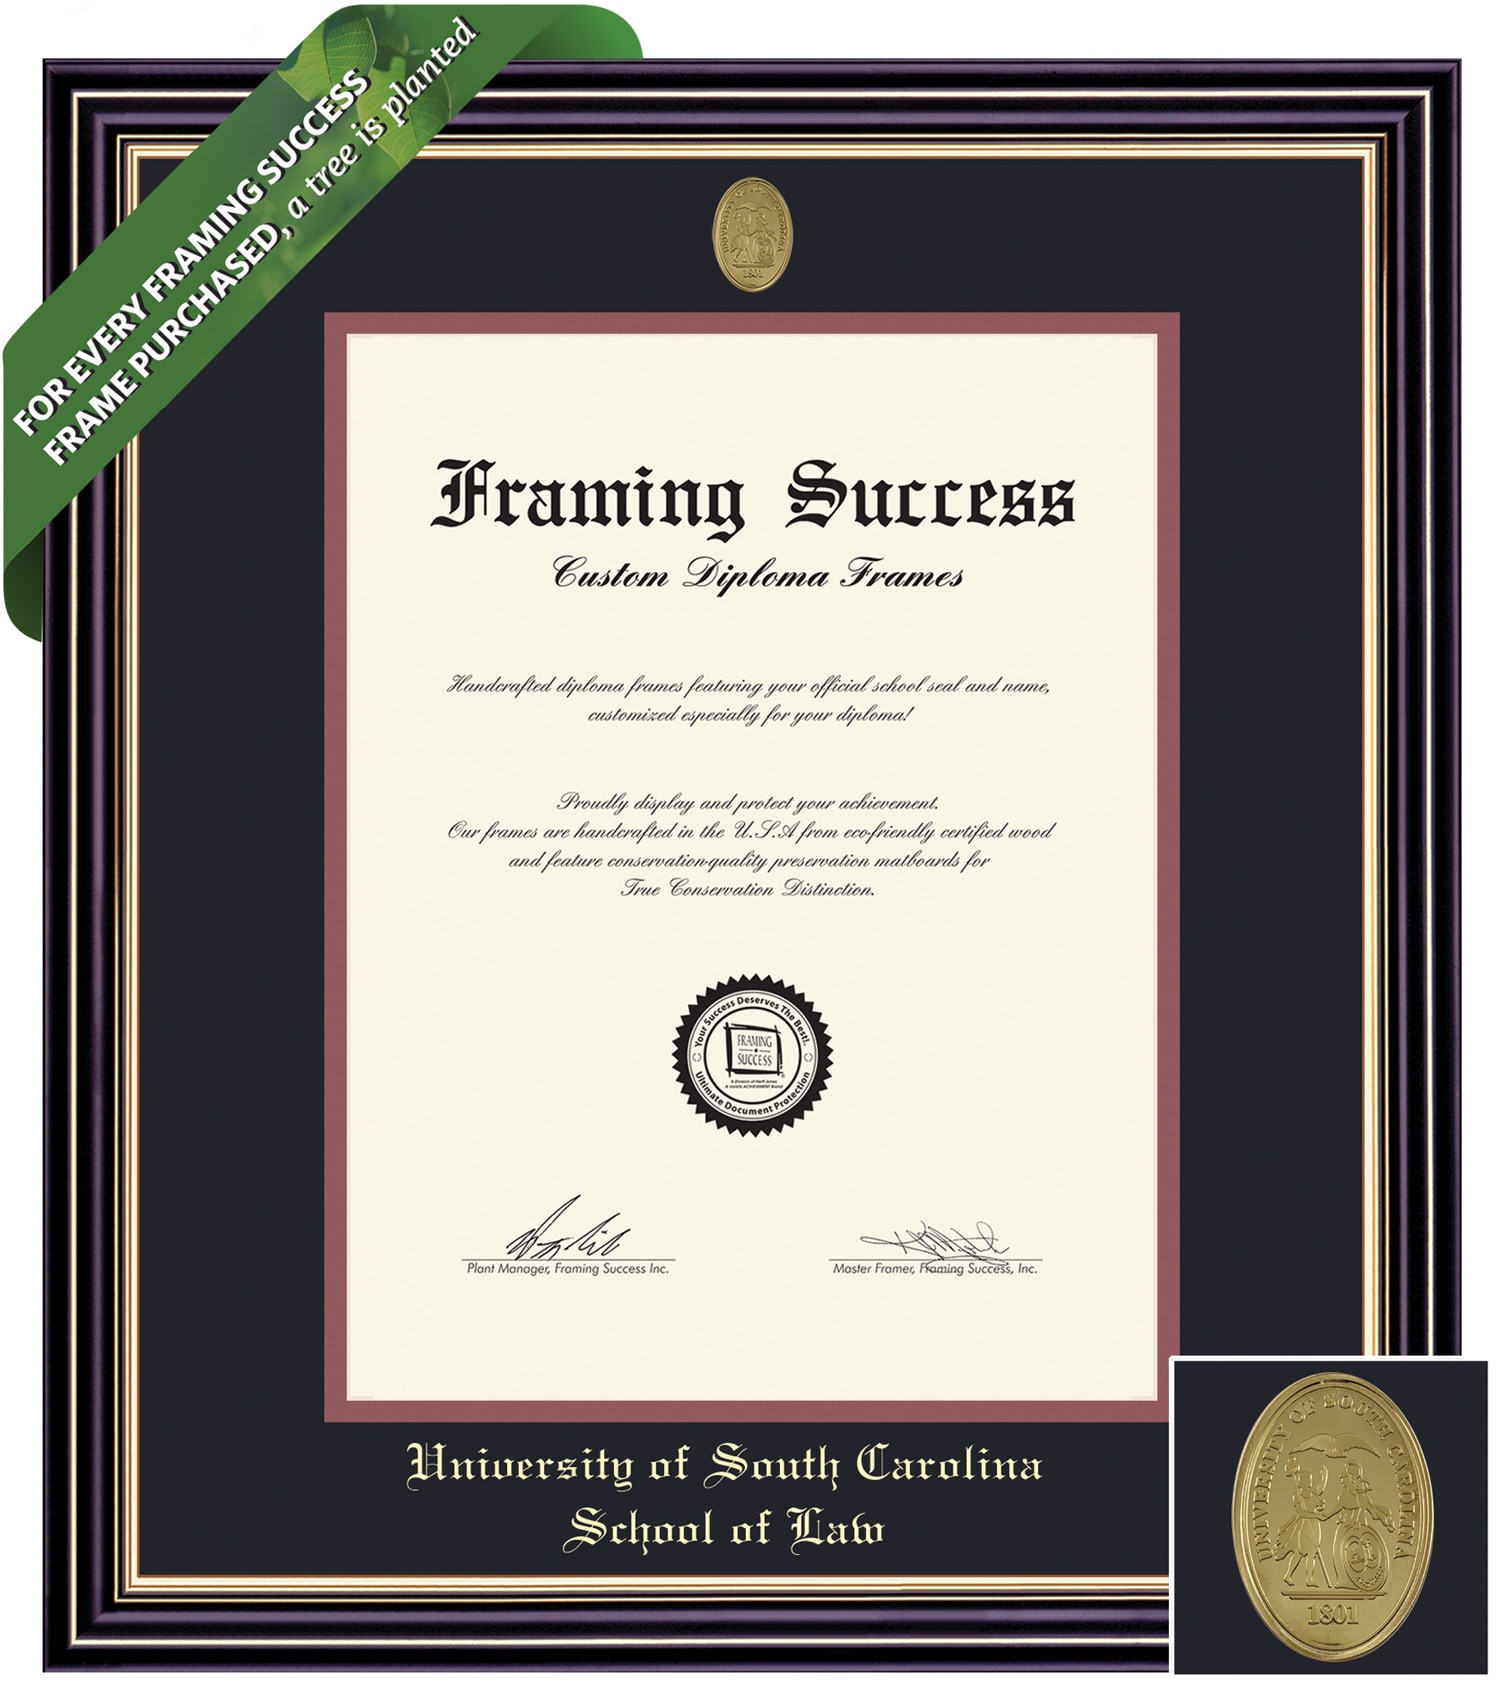 Framing Success 14 x 11 Prestige Gold Medallion Law Diploma Frame